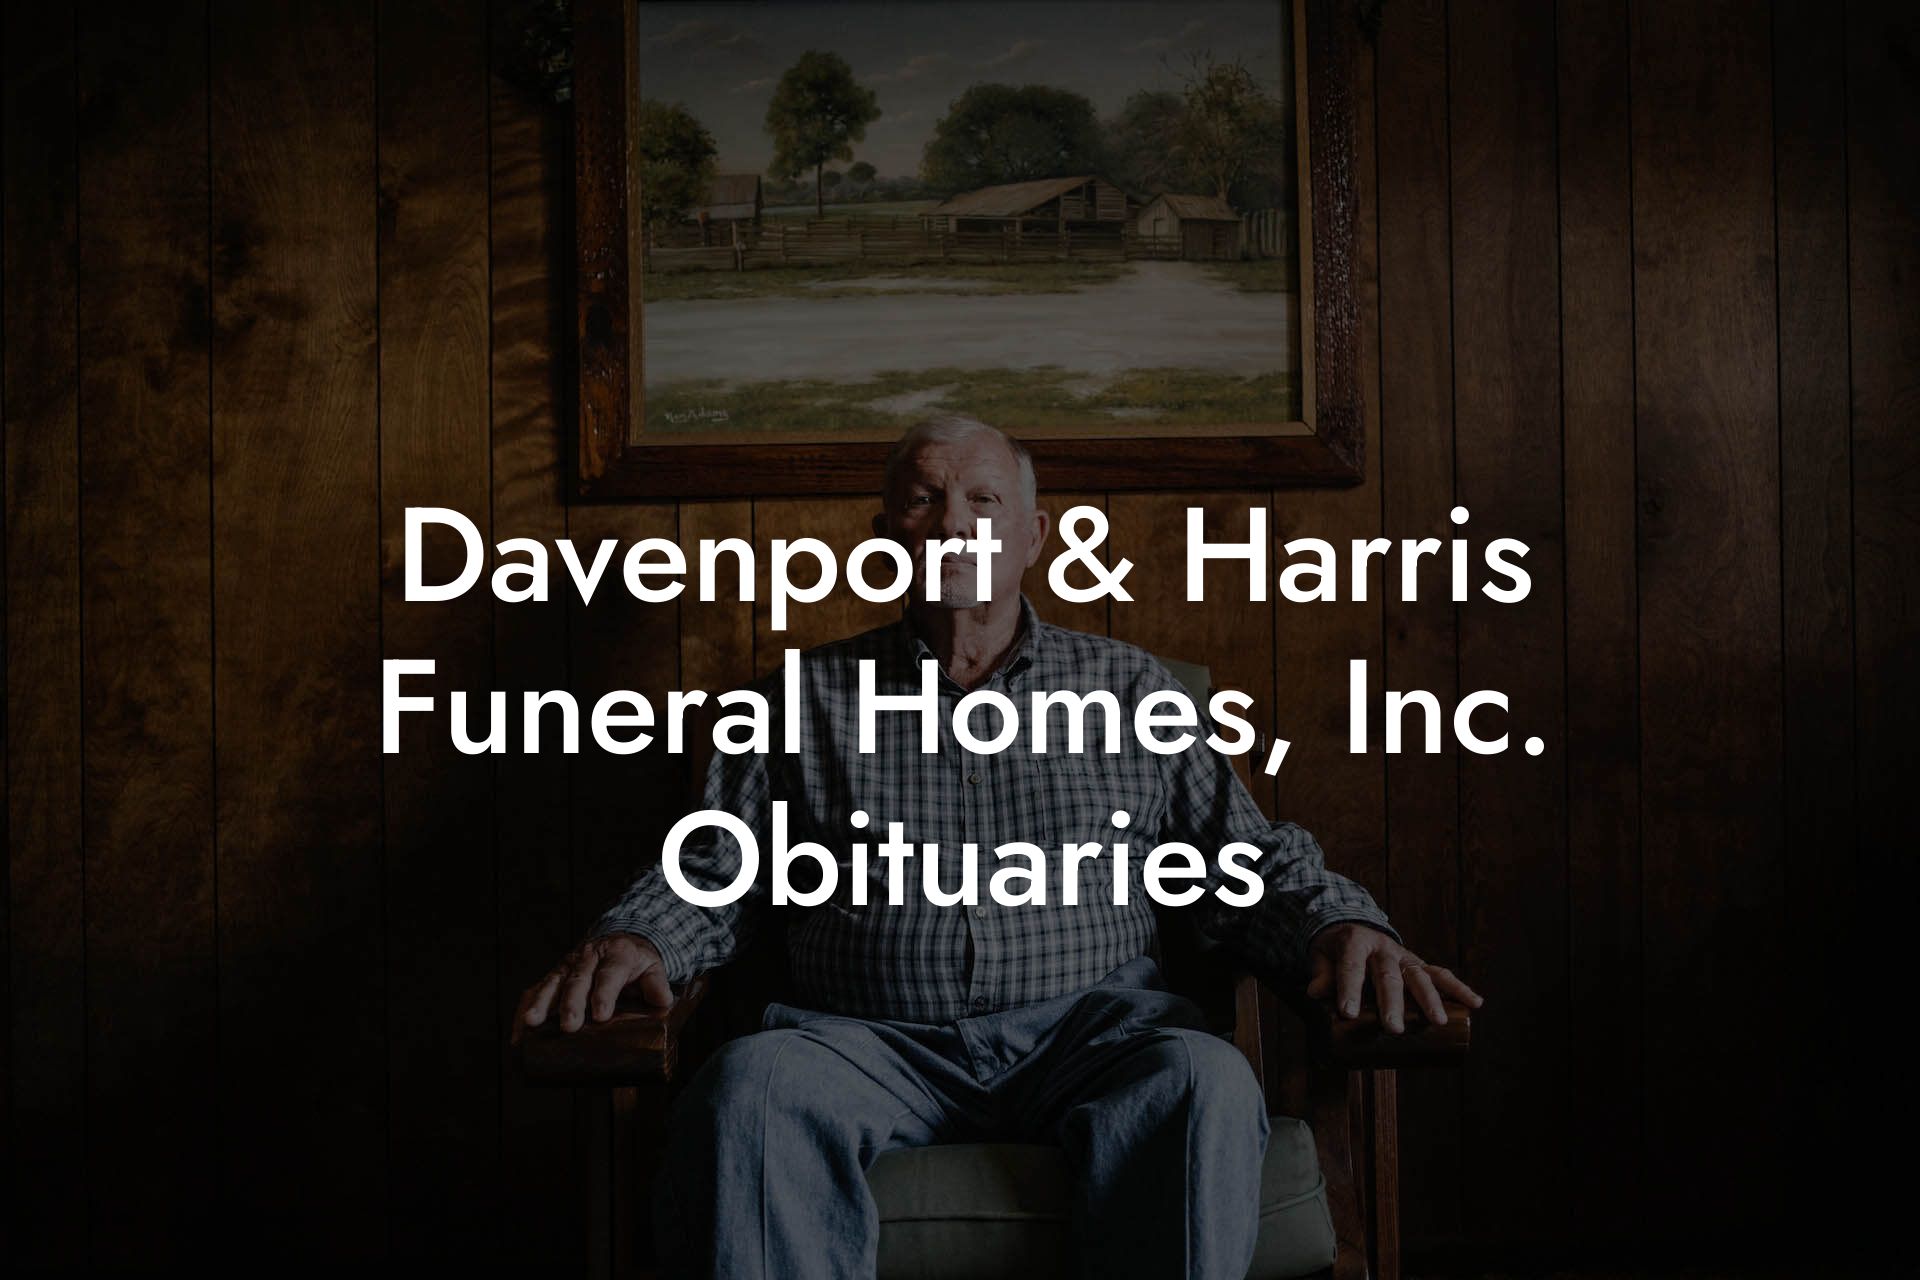 Davenport & Harris Funeral Homes, Inc. Obituaries